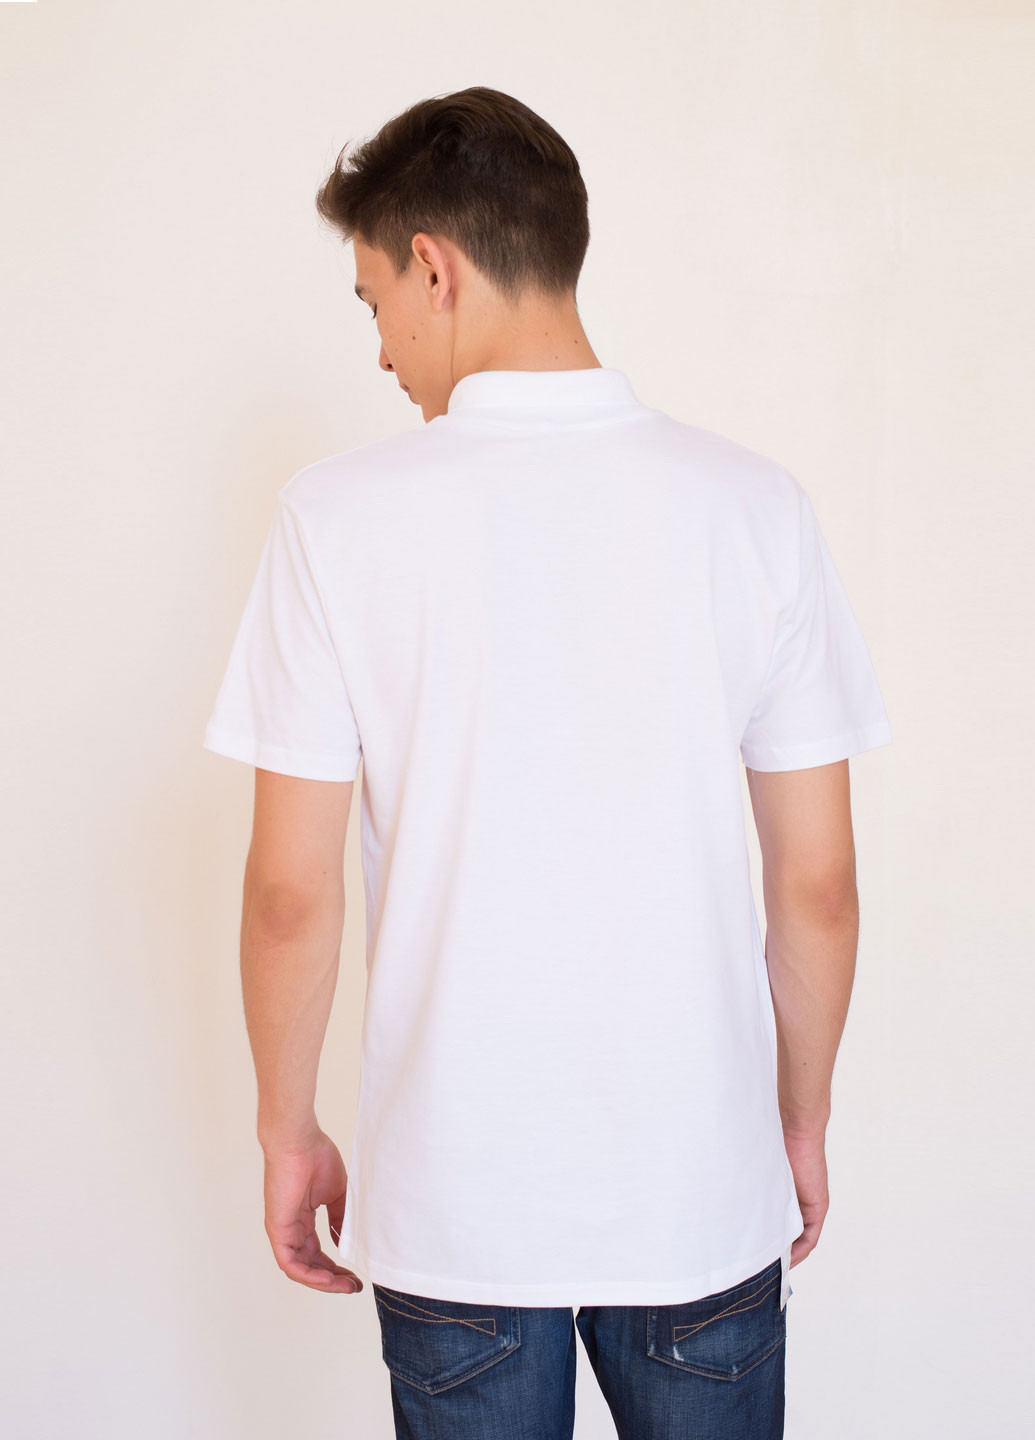 Белая футболка-футболка поло для мужчин Наталюкс